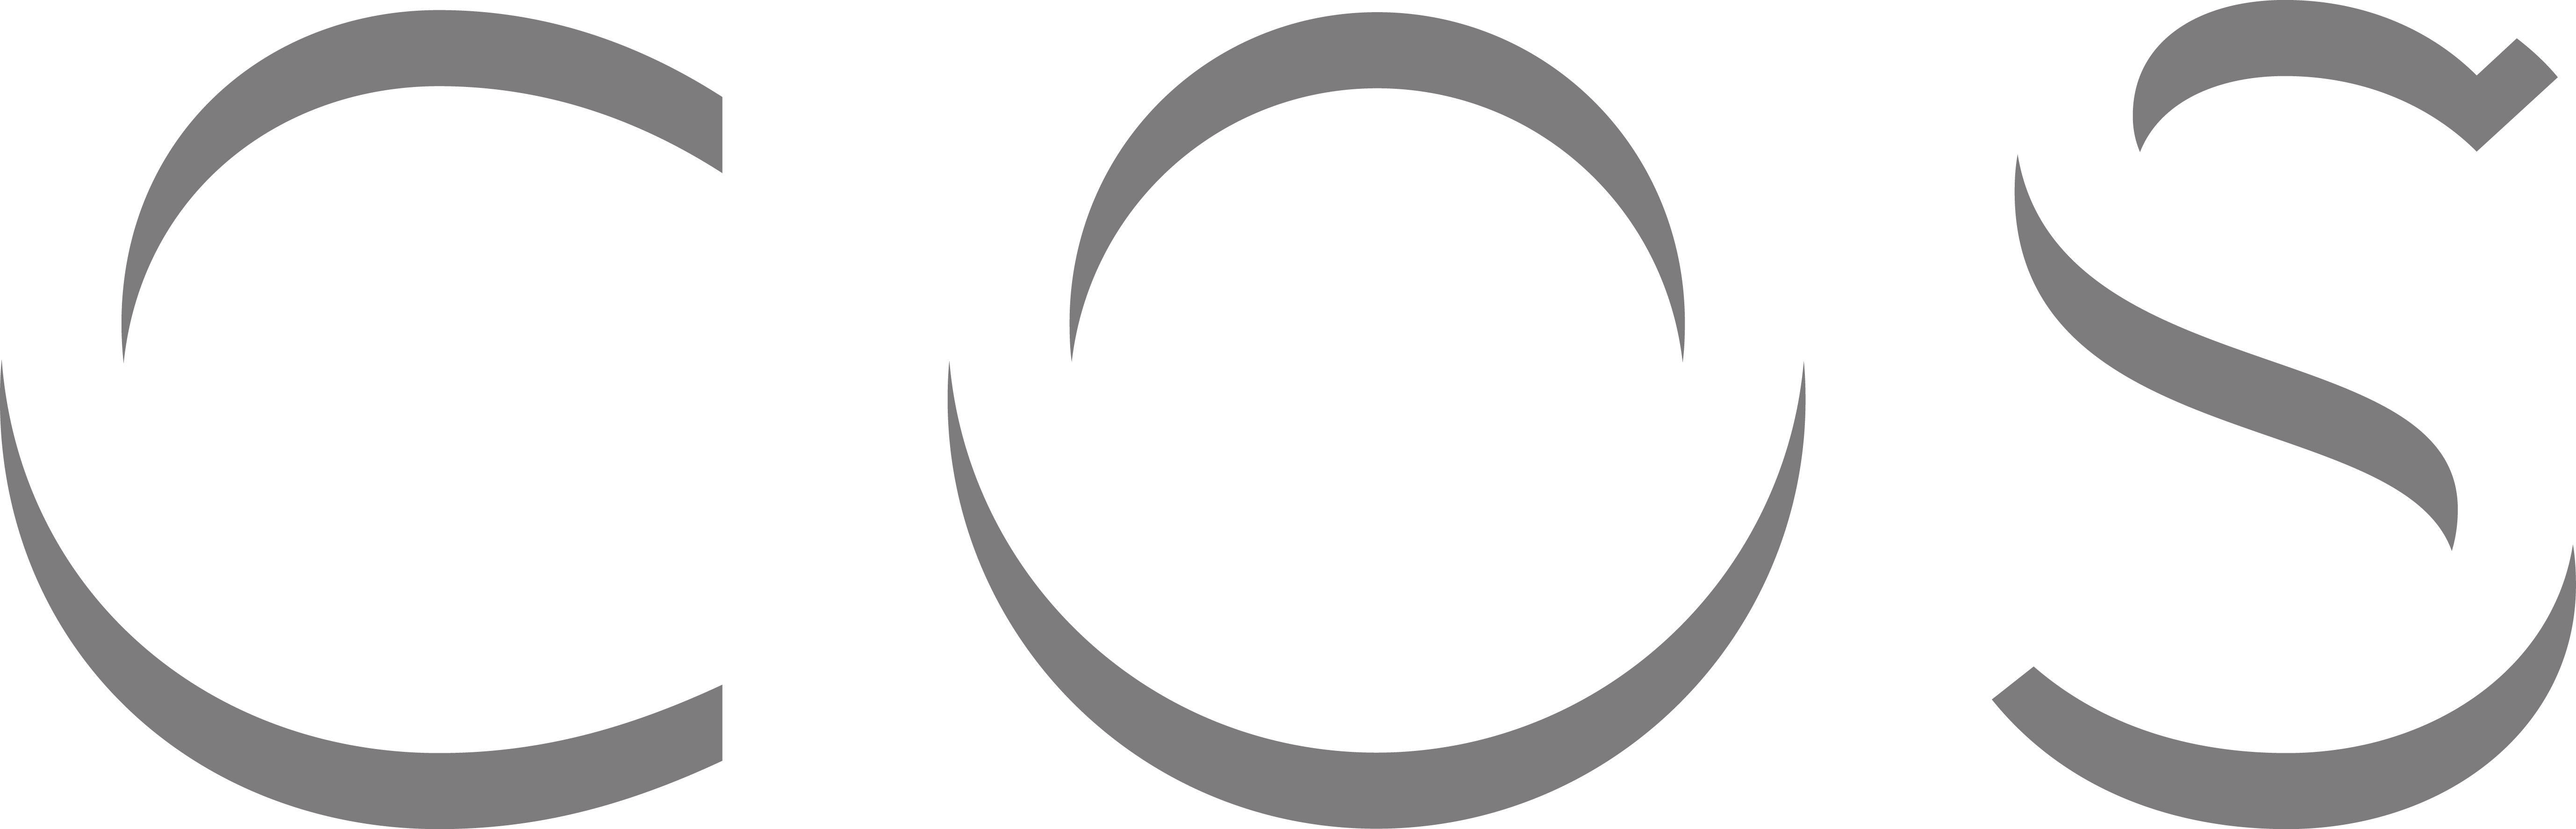 Cos Logo - File:COS LOGO.jpg - Wikimedia Commons